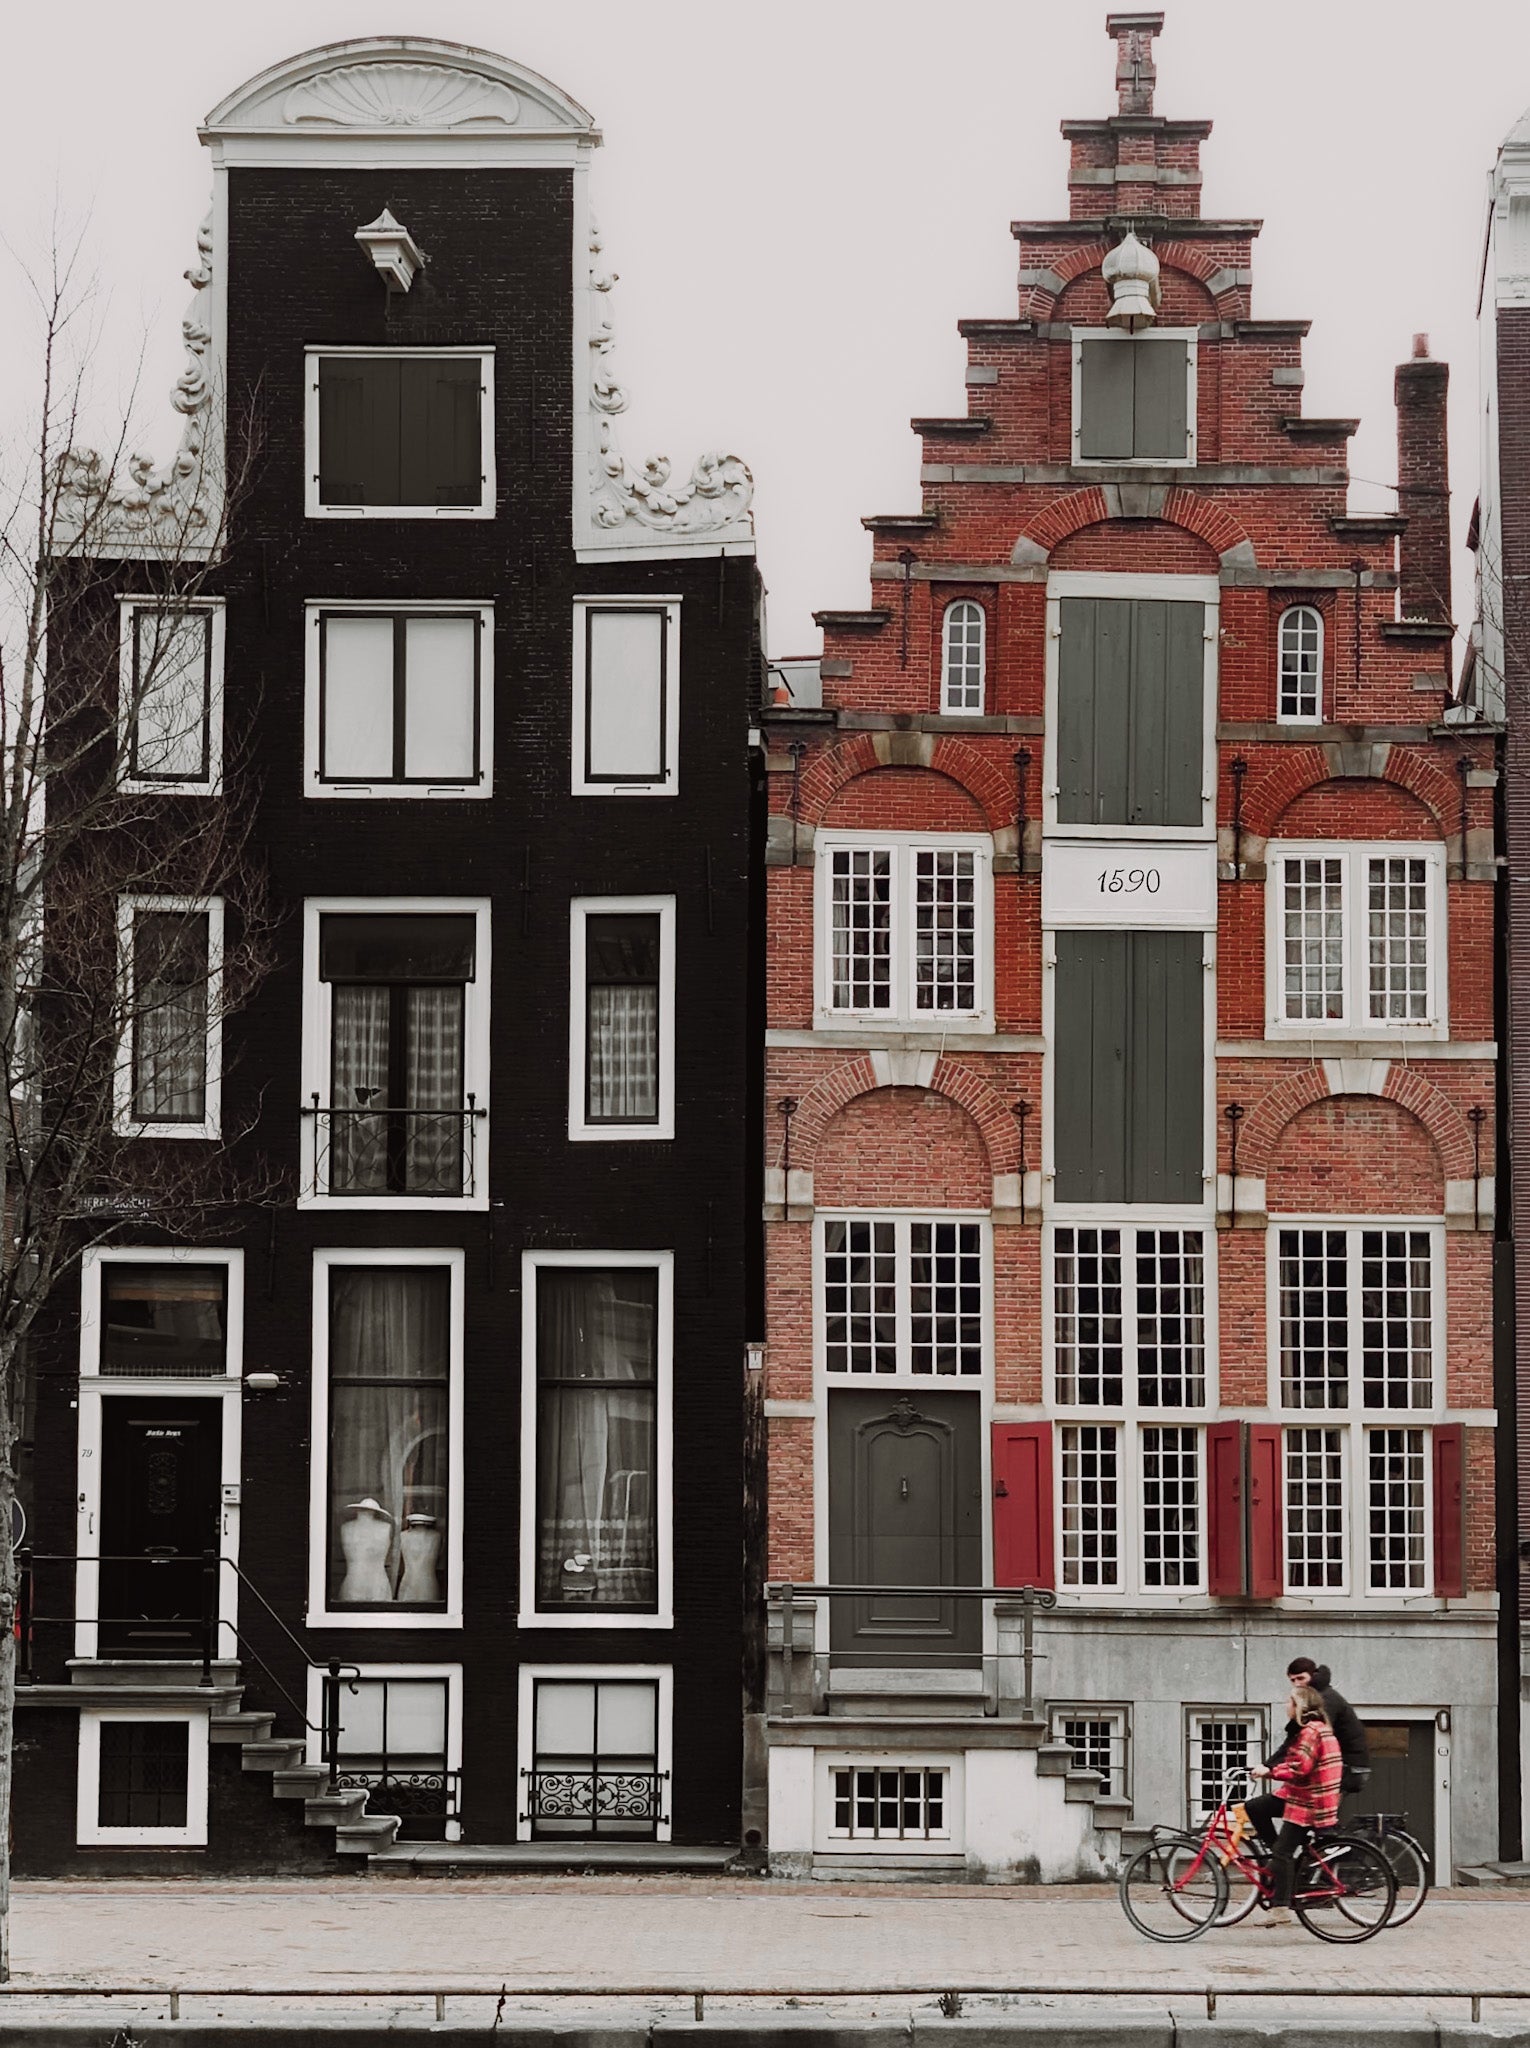 Amsterdam Herengracht